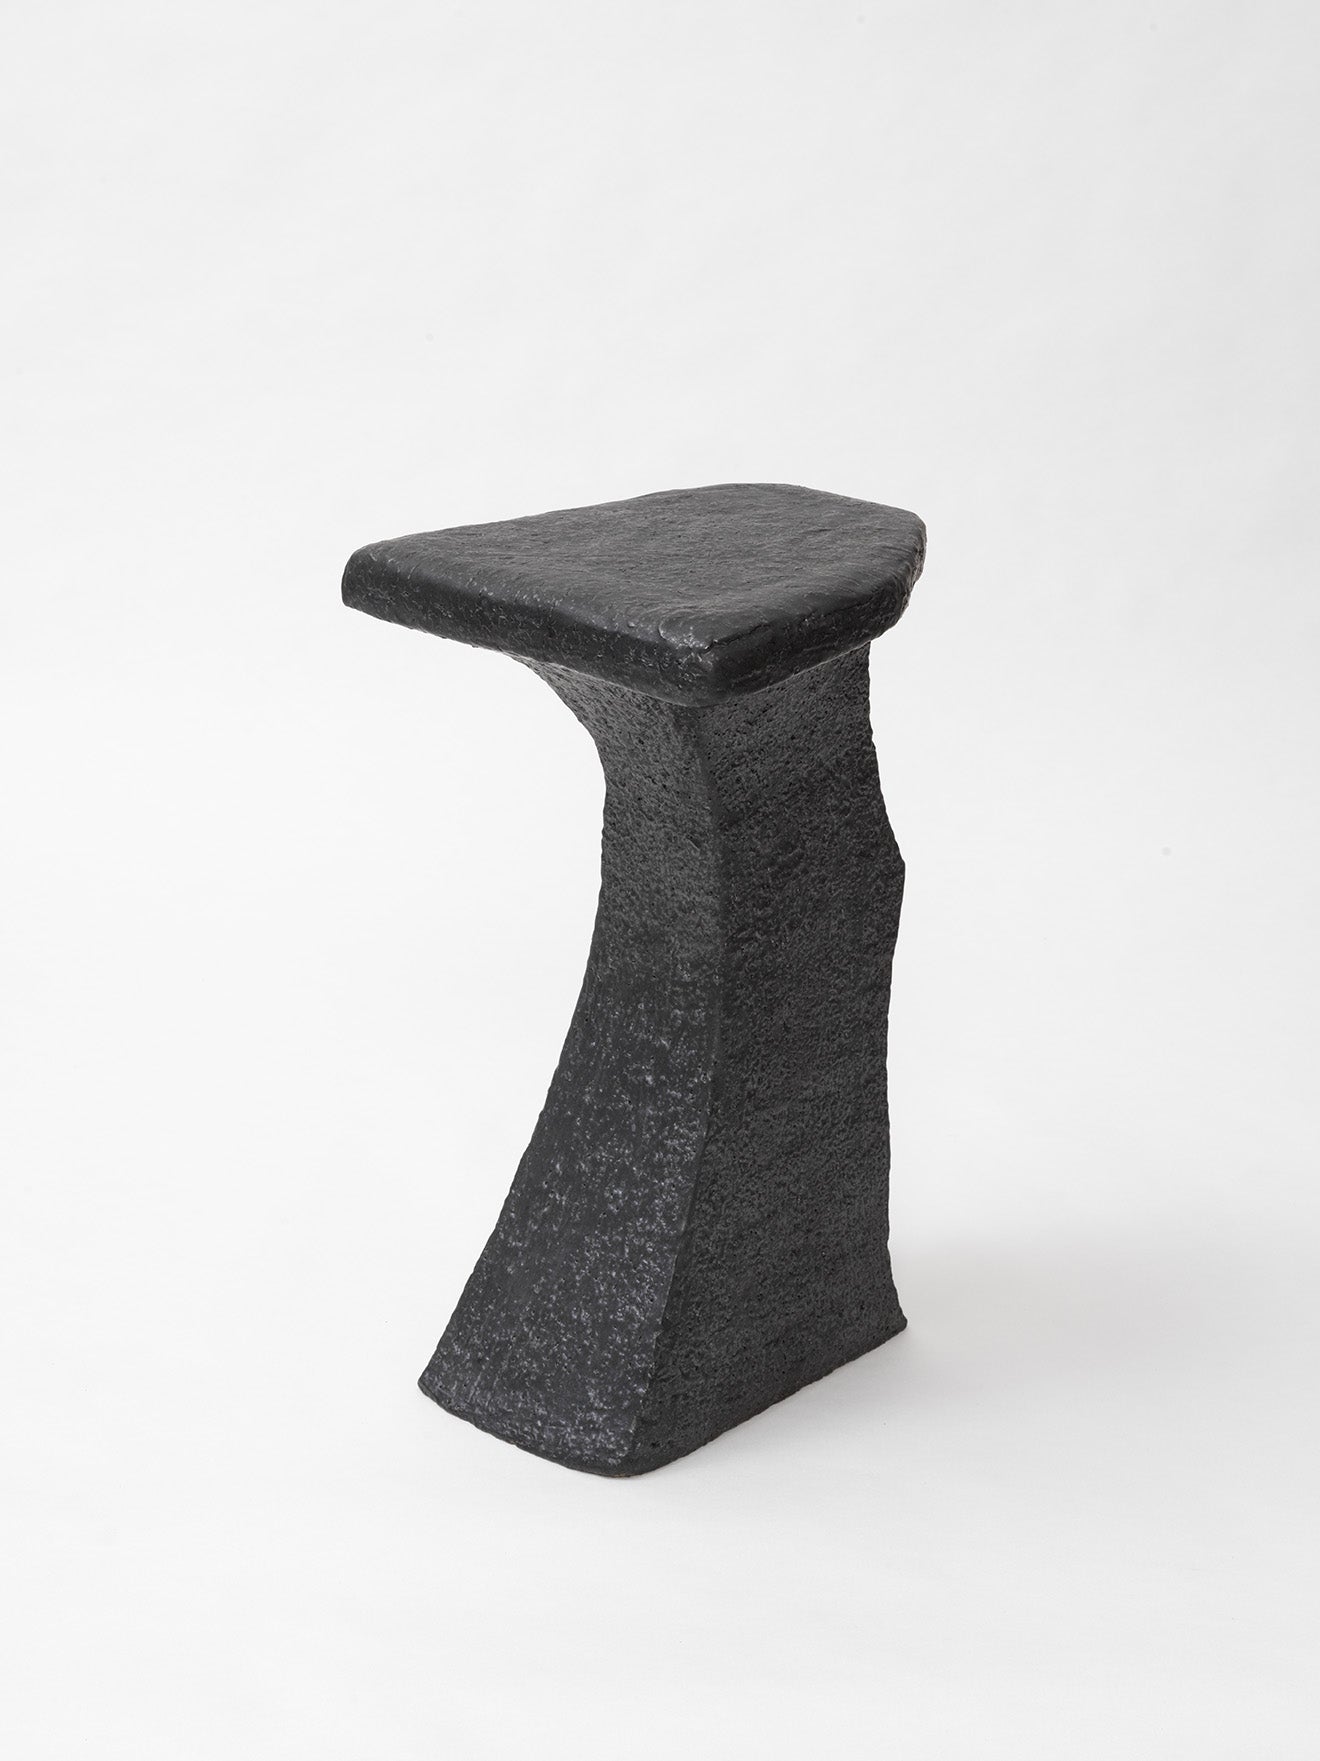 Christine Roland, ‘Black table’, 2020